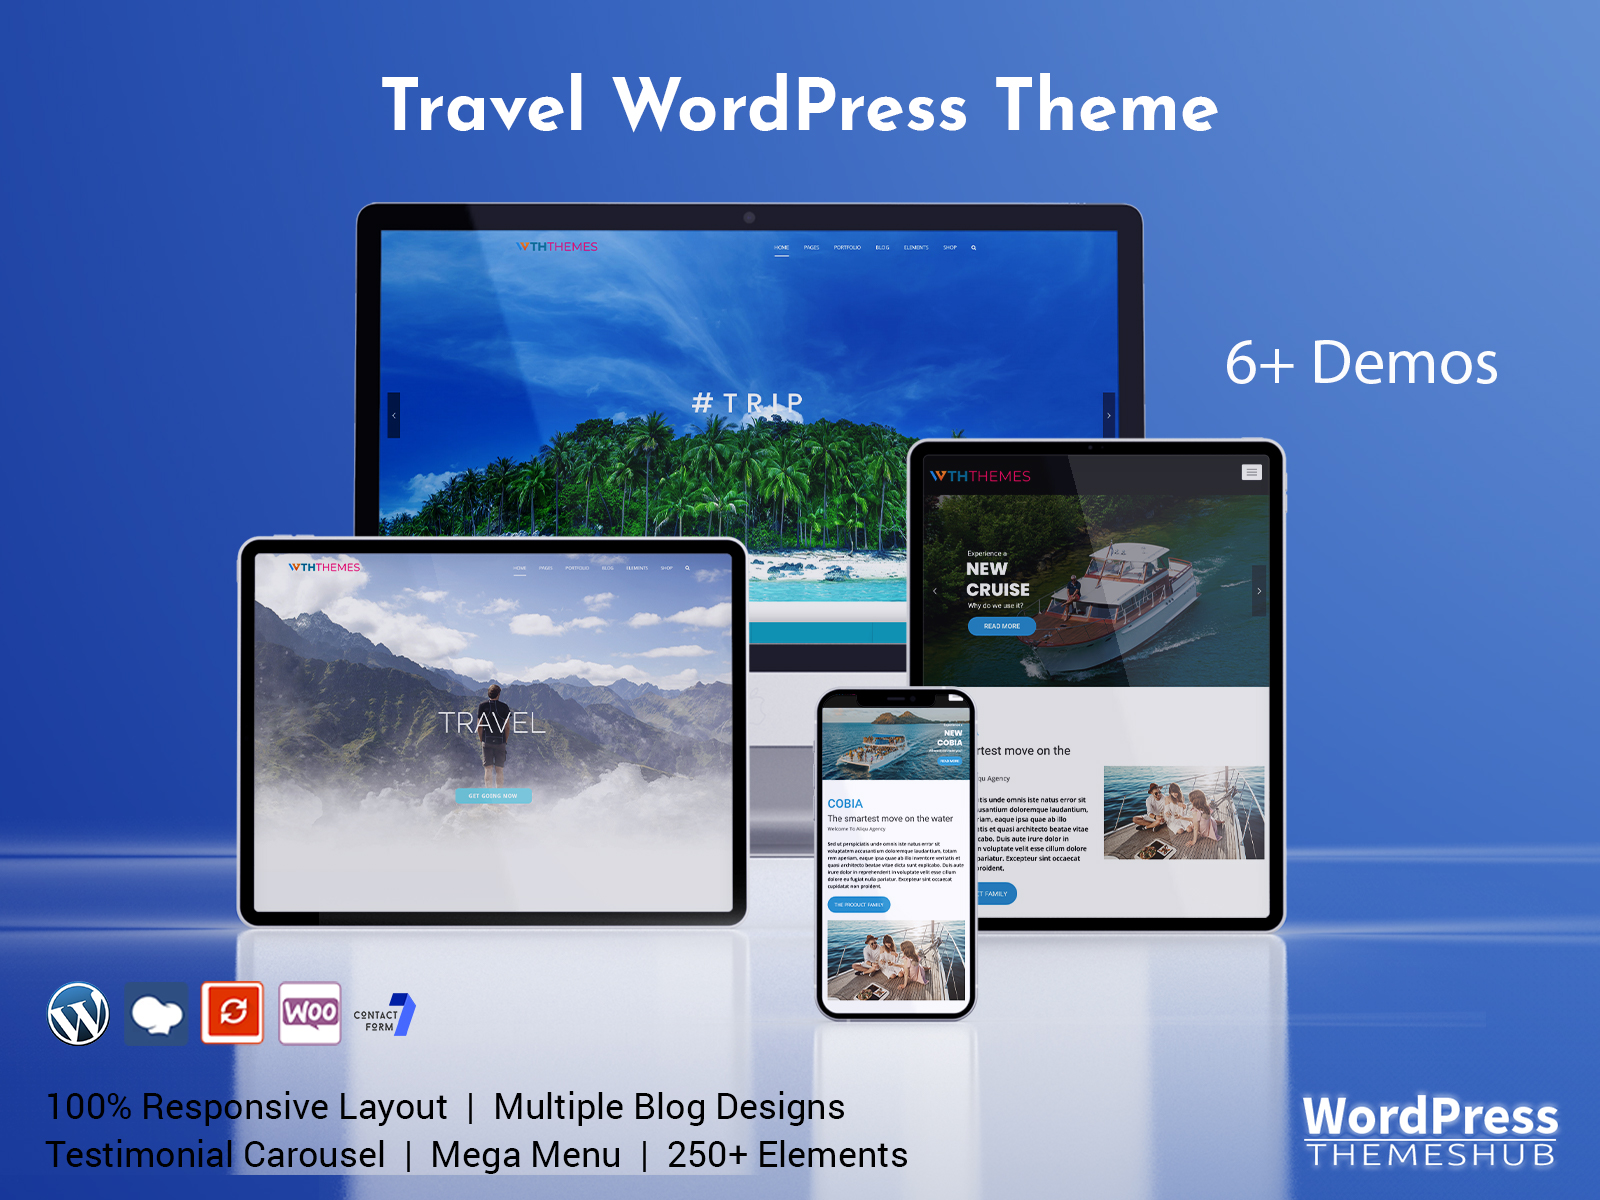 Travel WordPress Theme To Make Perfect Travel Websites